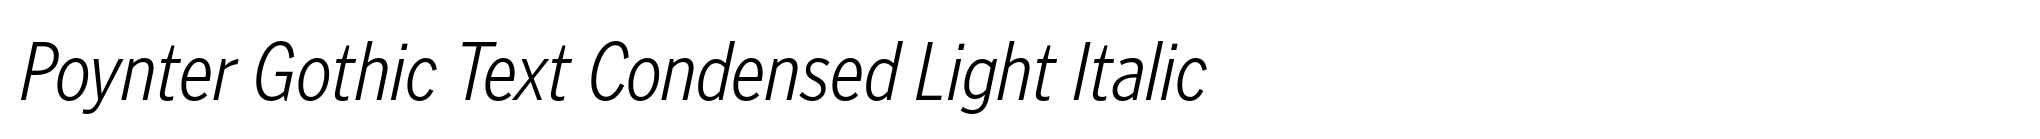 Poynter Gothic Text Condensed Light Italic image